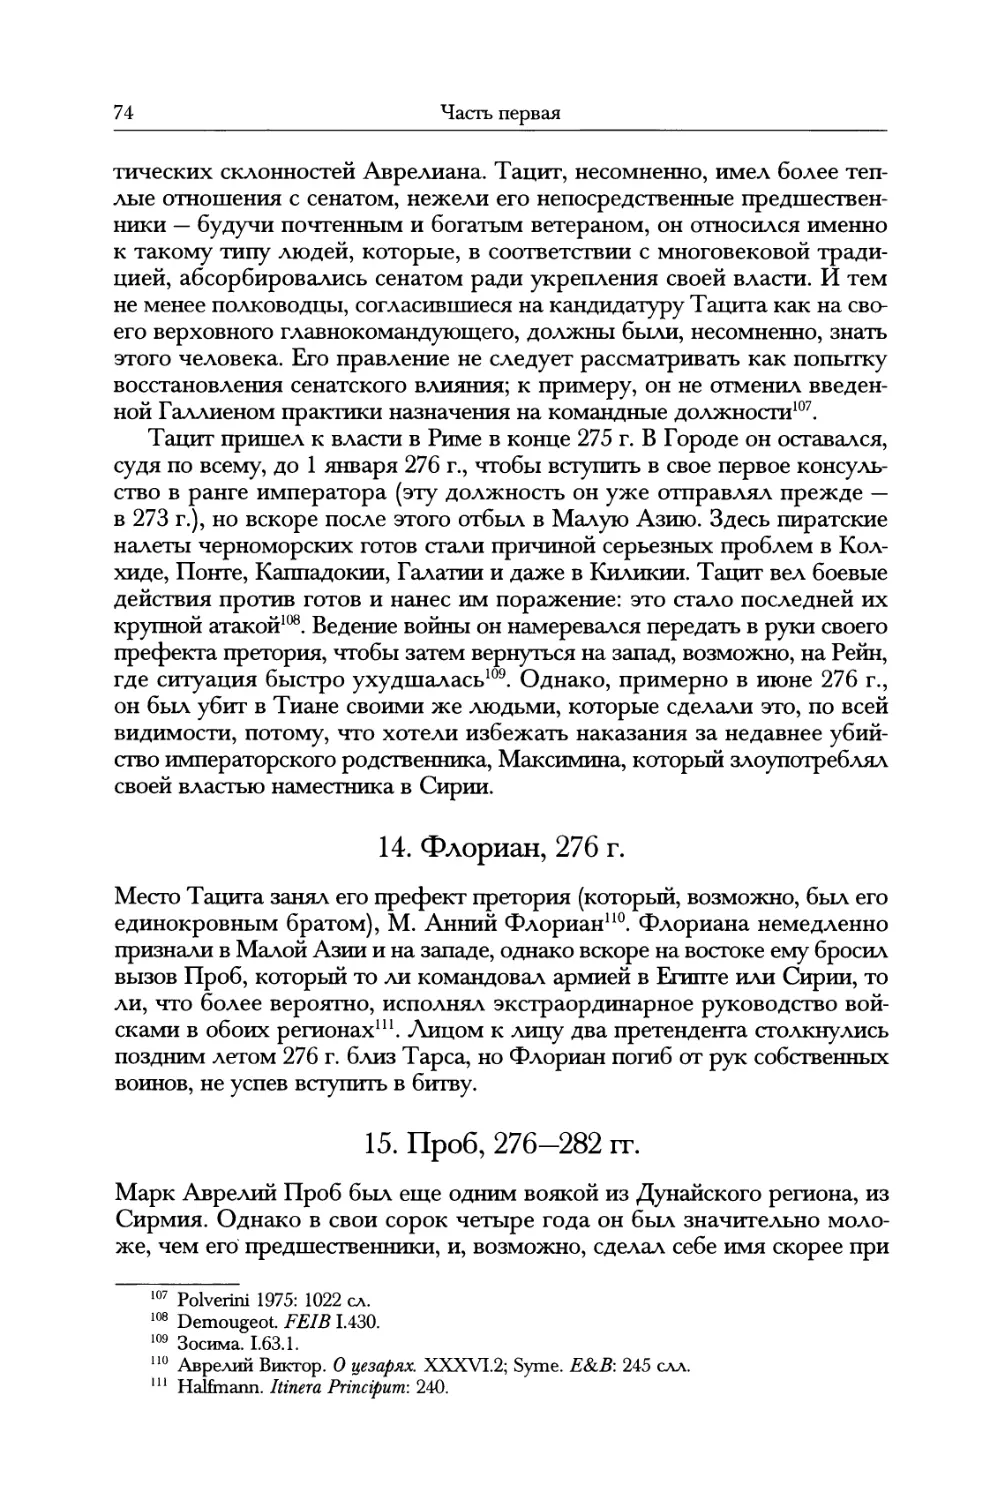 14. Флориан, 276 г.
15. Проб, 276-282 гг.